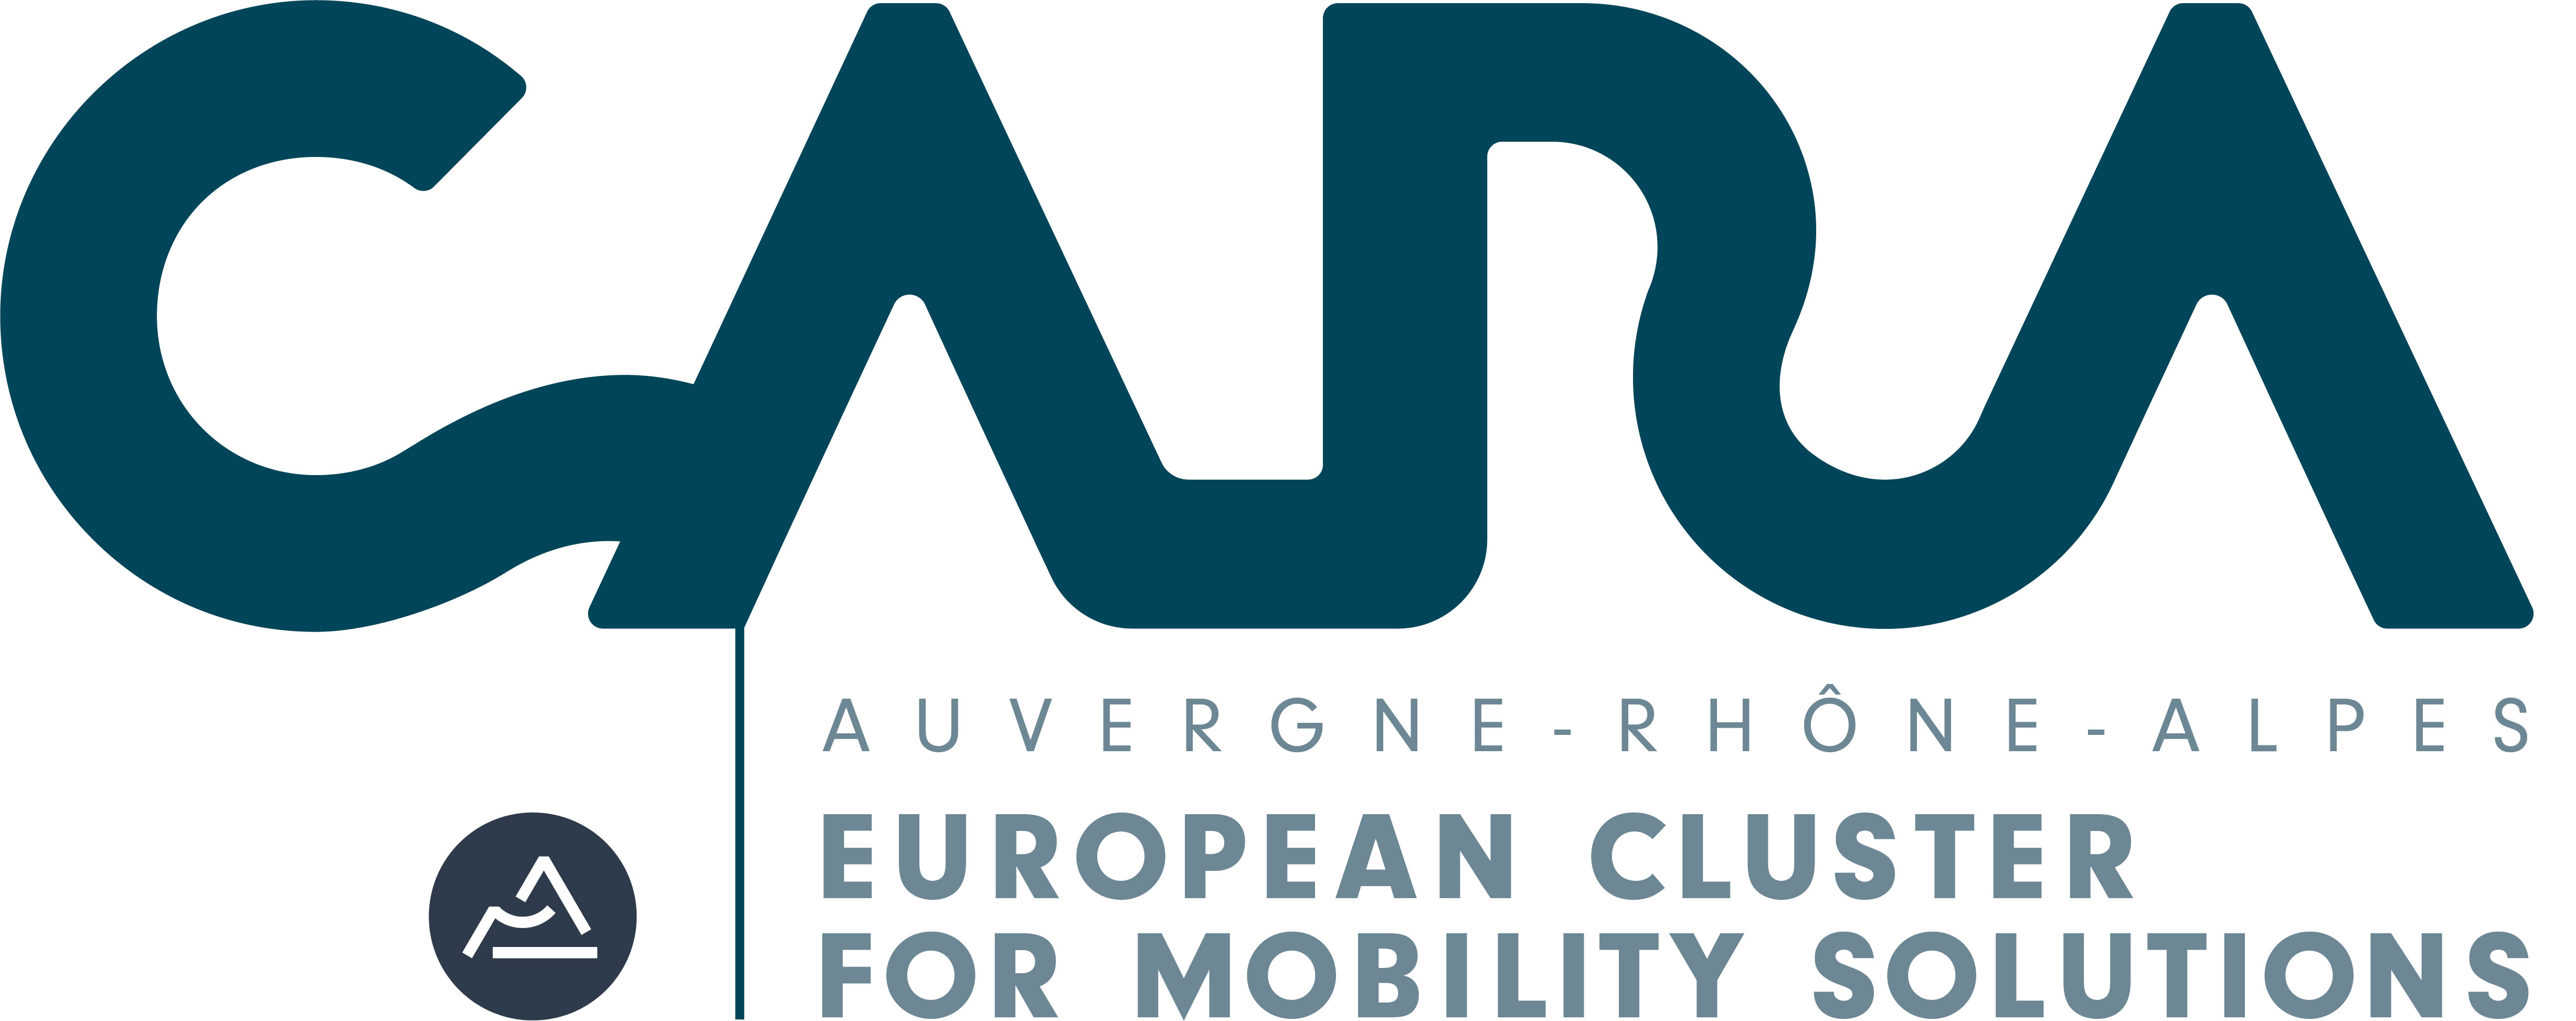 Logo adherent CARA AUVERGNE RHÔNE-ALPES - EUROPEAN CLUSTER FOR MOBILITY SOLUTIONS